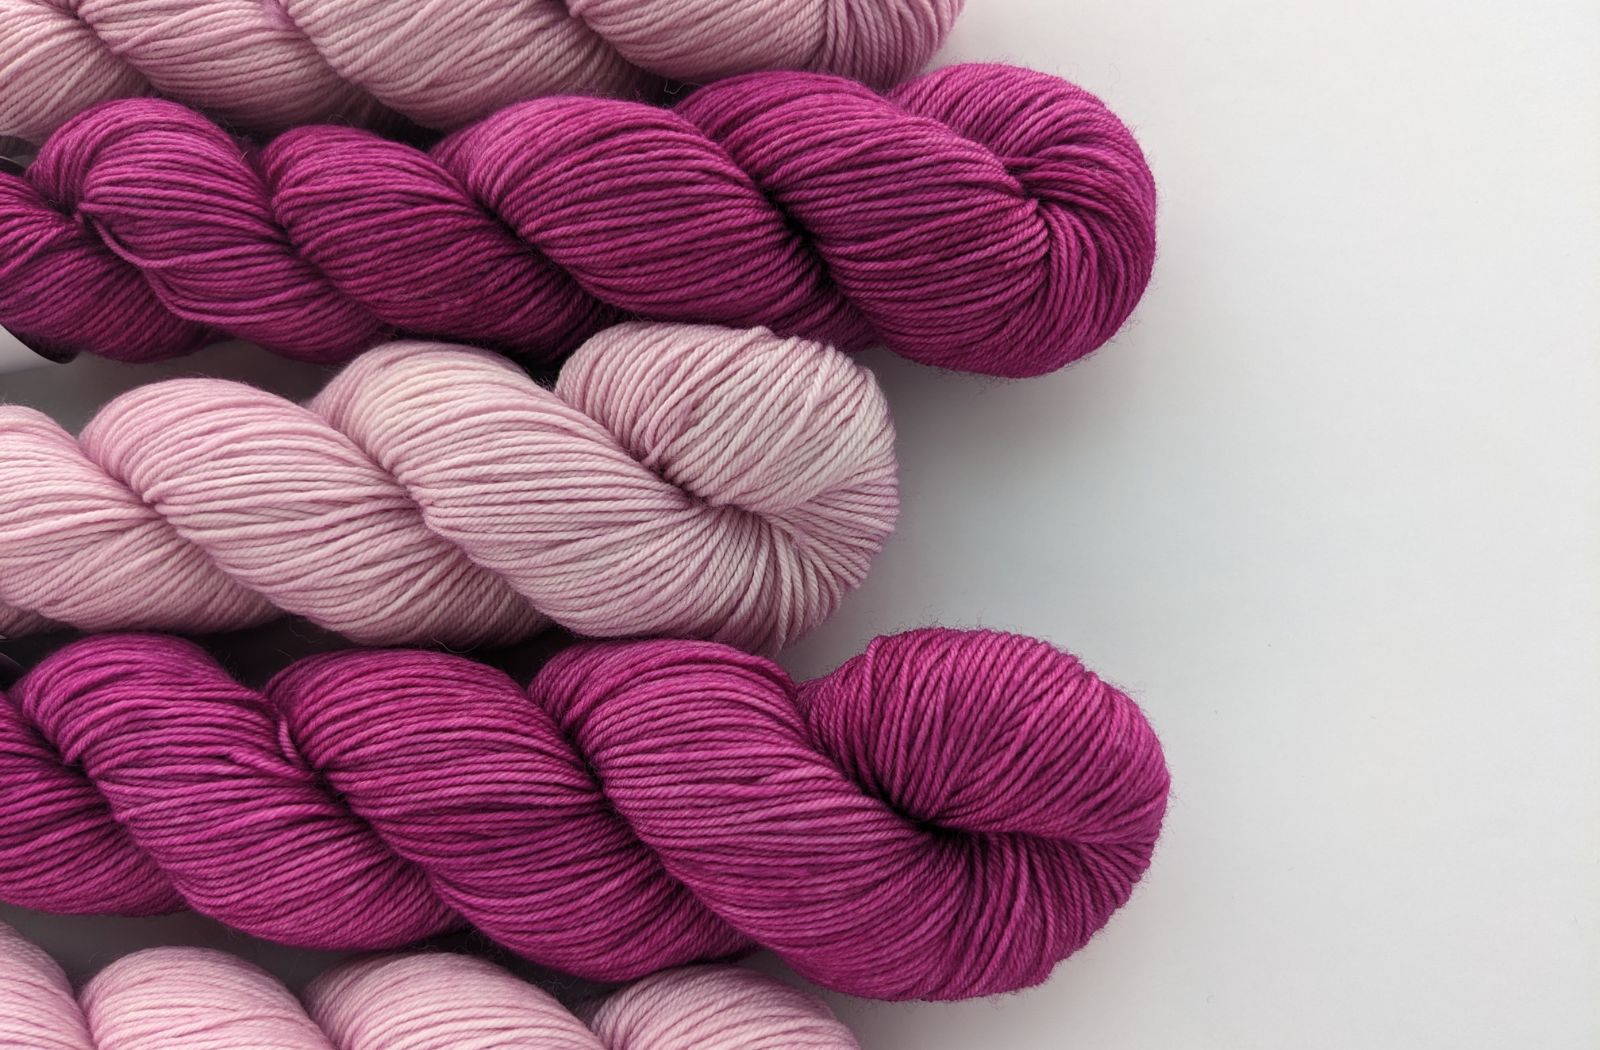 Image of sock yarn skeins showing pink and magenta yarn colors